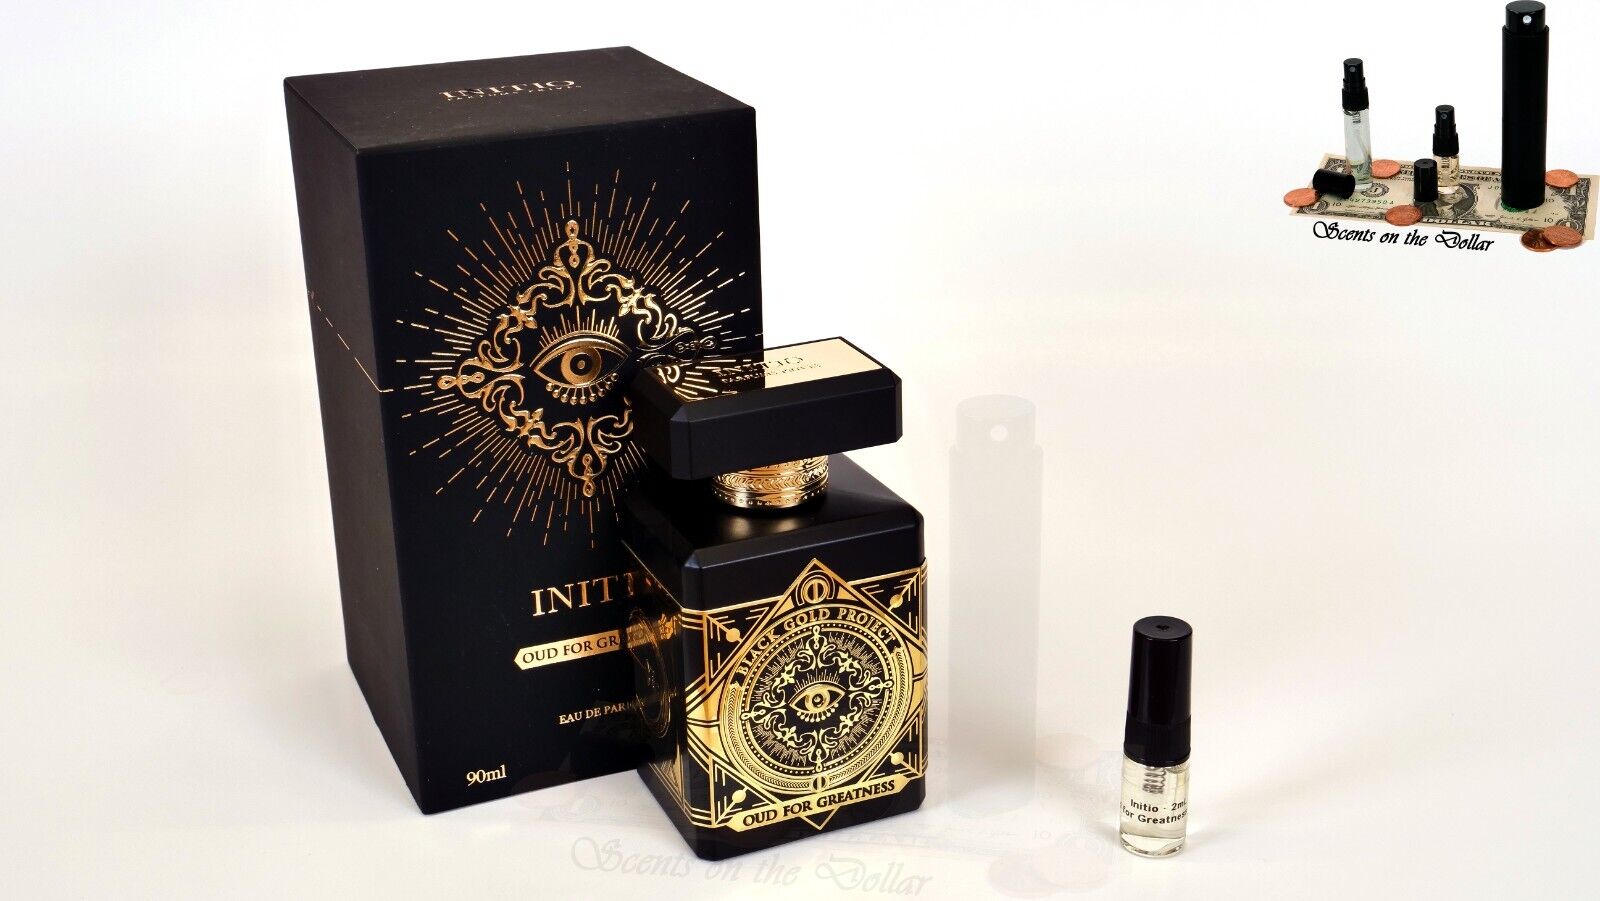 Initio Oud for Greatness Eau De Parfum (EDP) 2mL Travel Spray Decant - FREE S/H